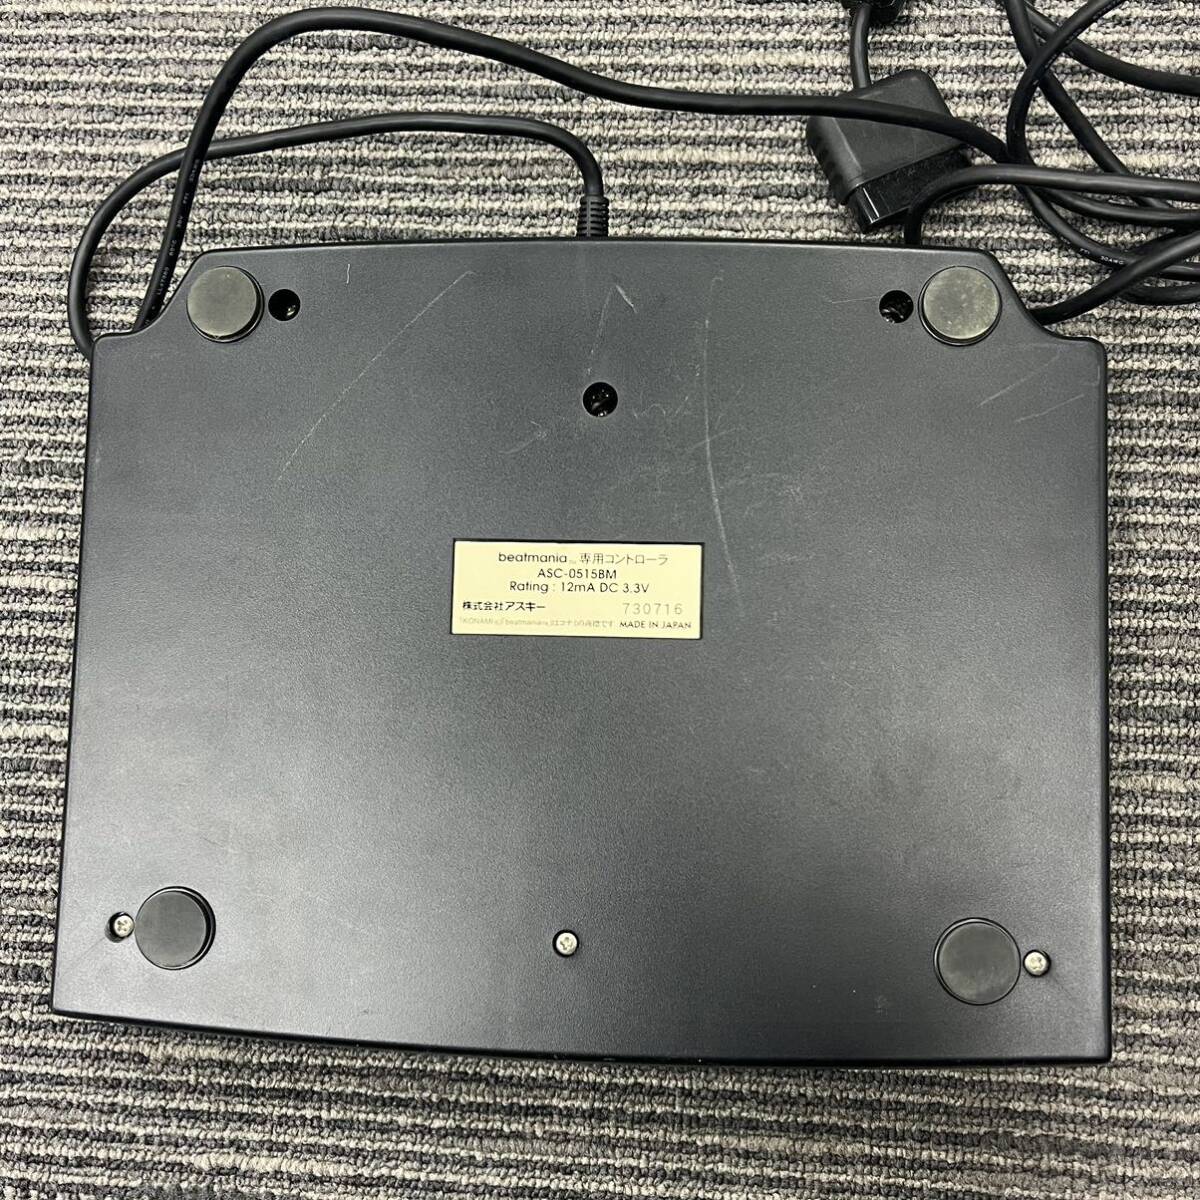 N332 コントローラー ソフト まとめPlayStation プレイステーション ビートマニア SONY スーパーファミコン ファミコン ジャンク品 中古 の画像3